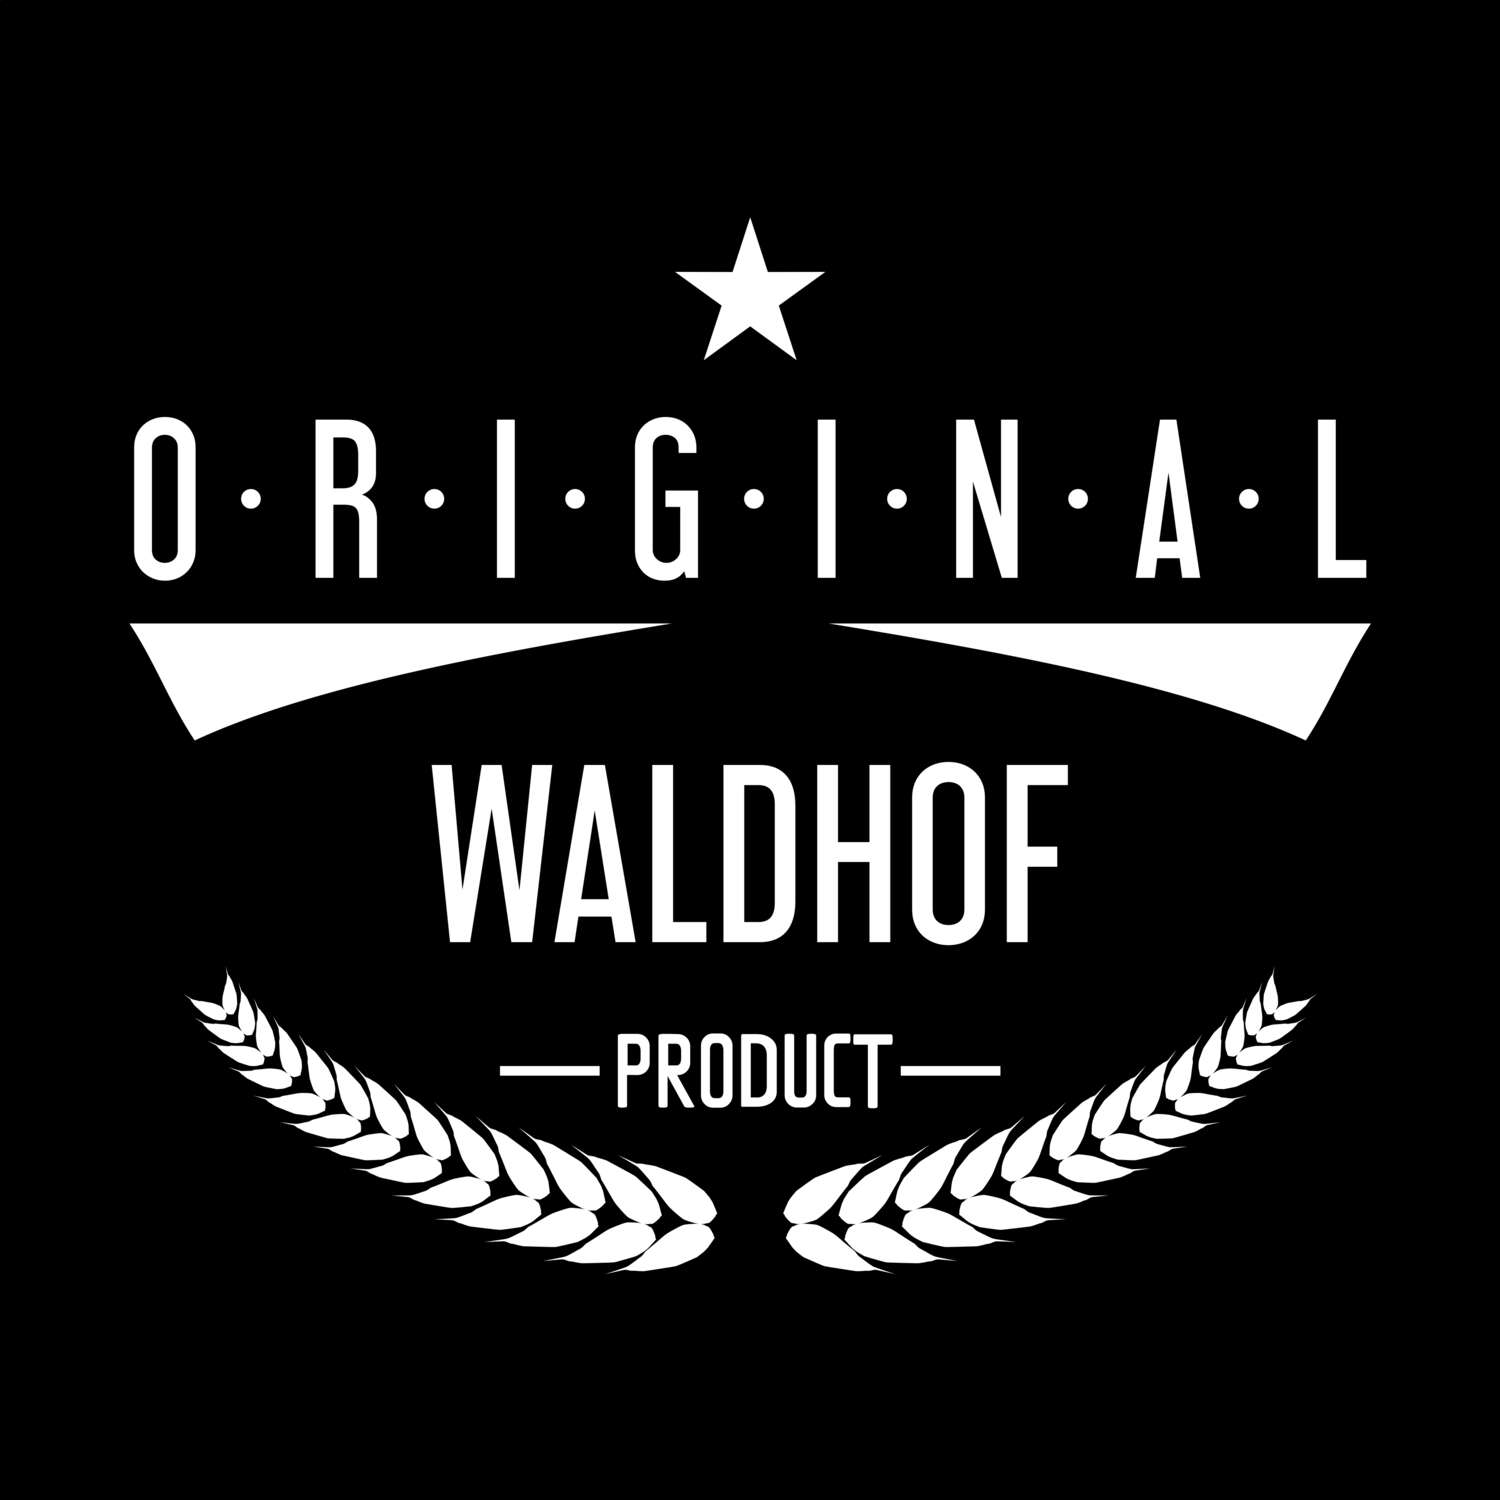 Waldhof T-Shirt »Original Product«